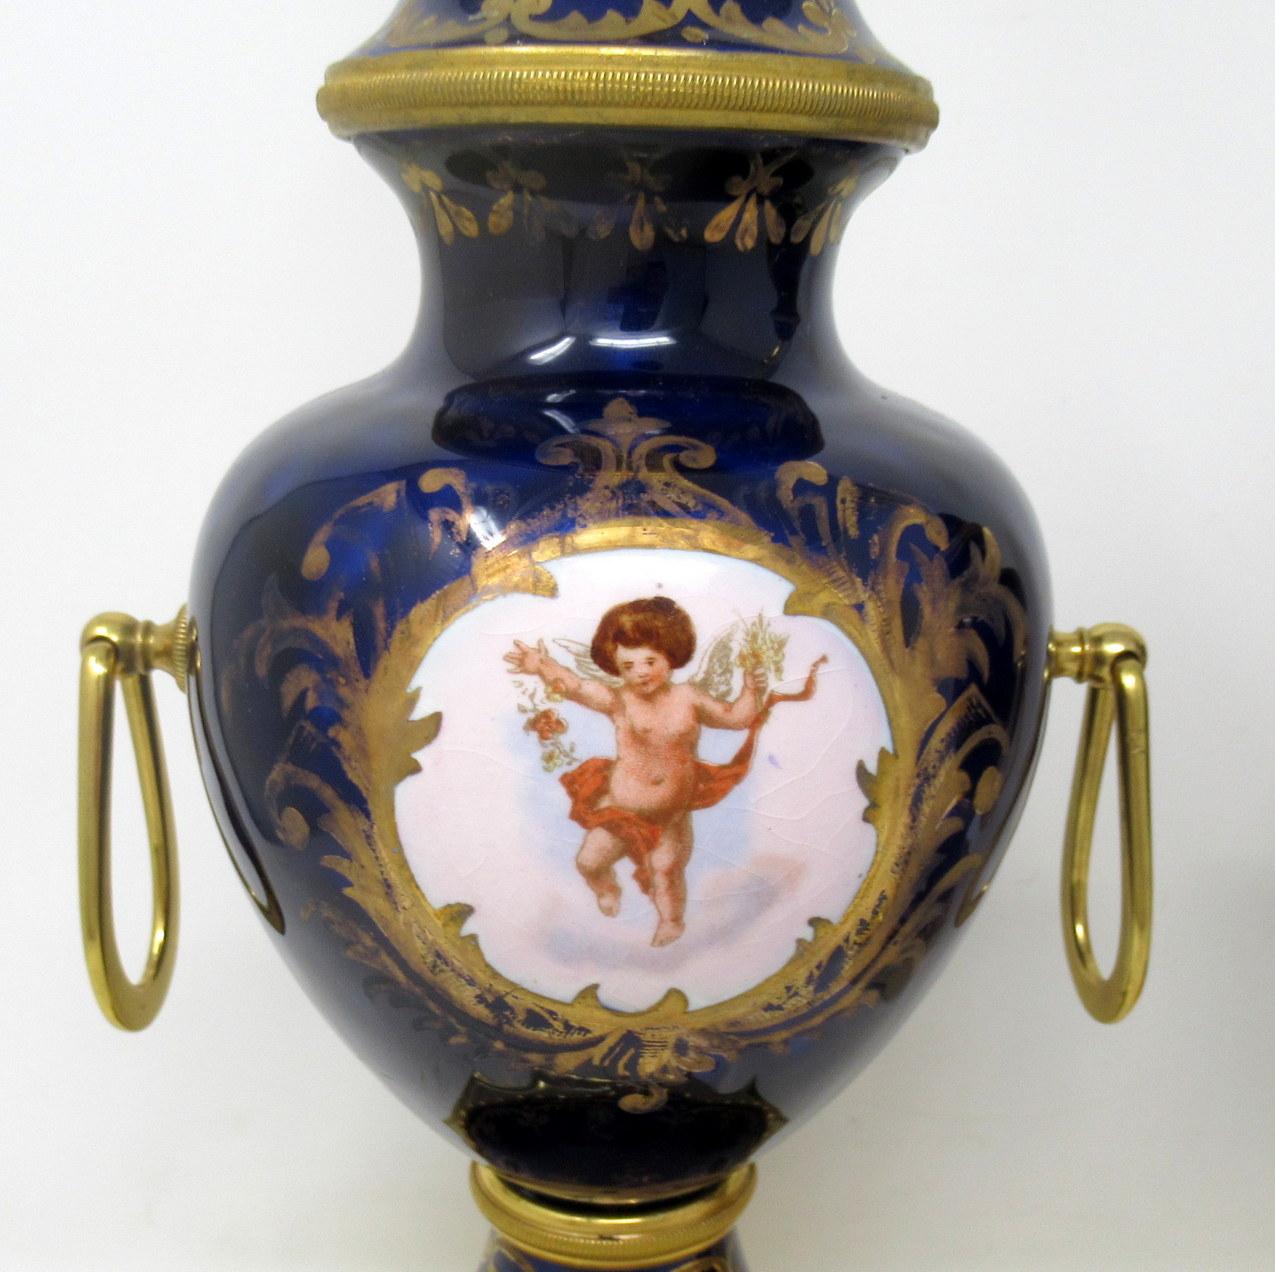 Pair of Antique French Sèvres Porcelain Ormolu Gilt Bronze Table Urn Lamps  2